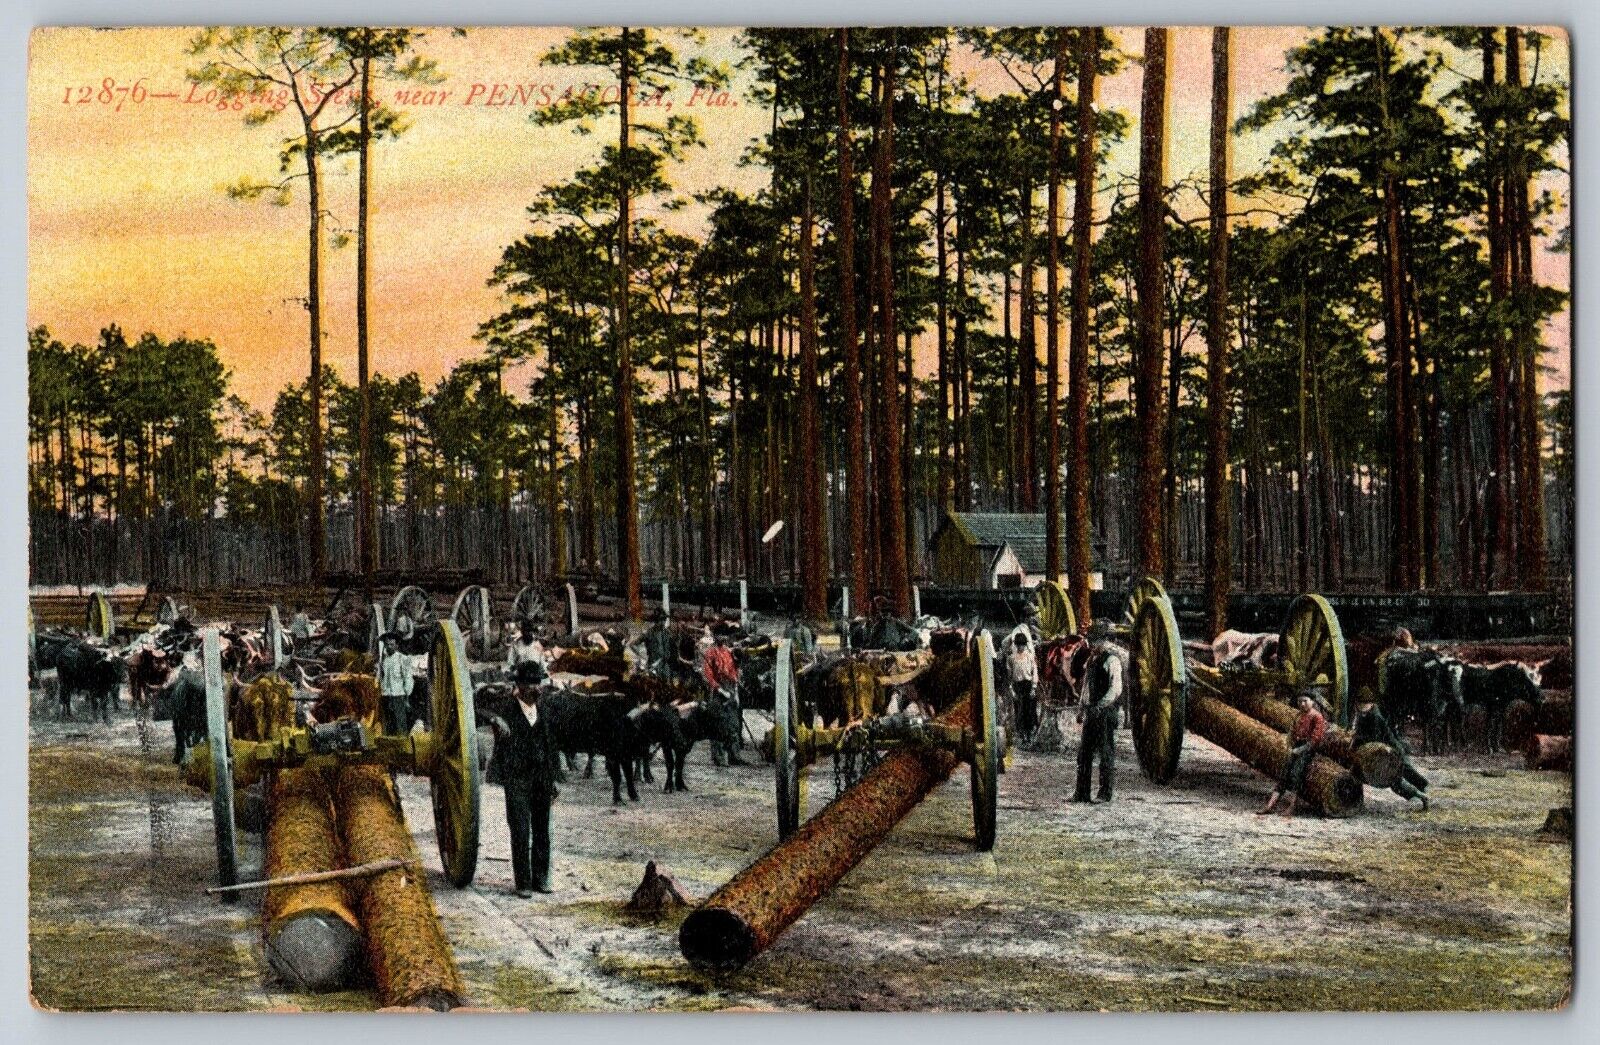 Logging scene near Pensacola, FL; highwheelers used for hauling logs, oxen